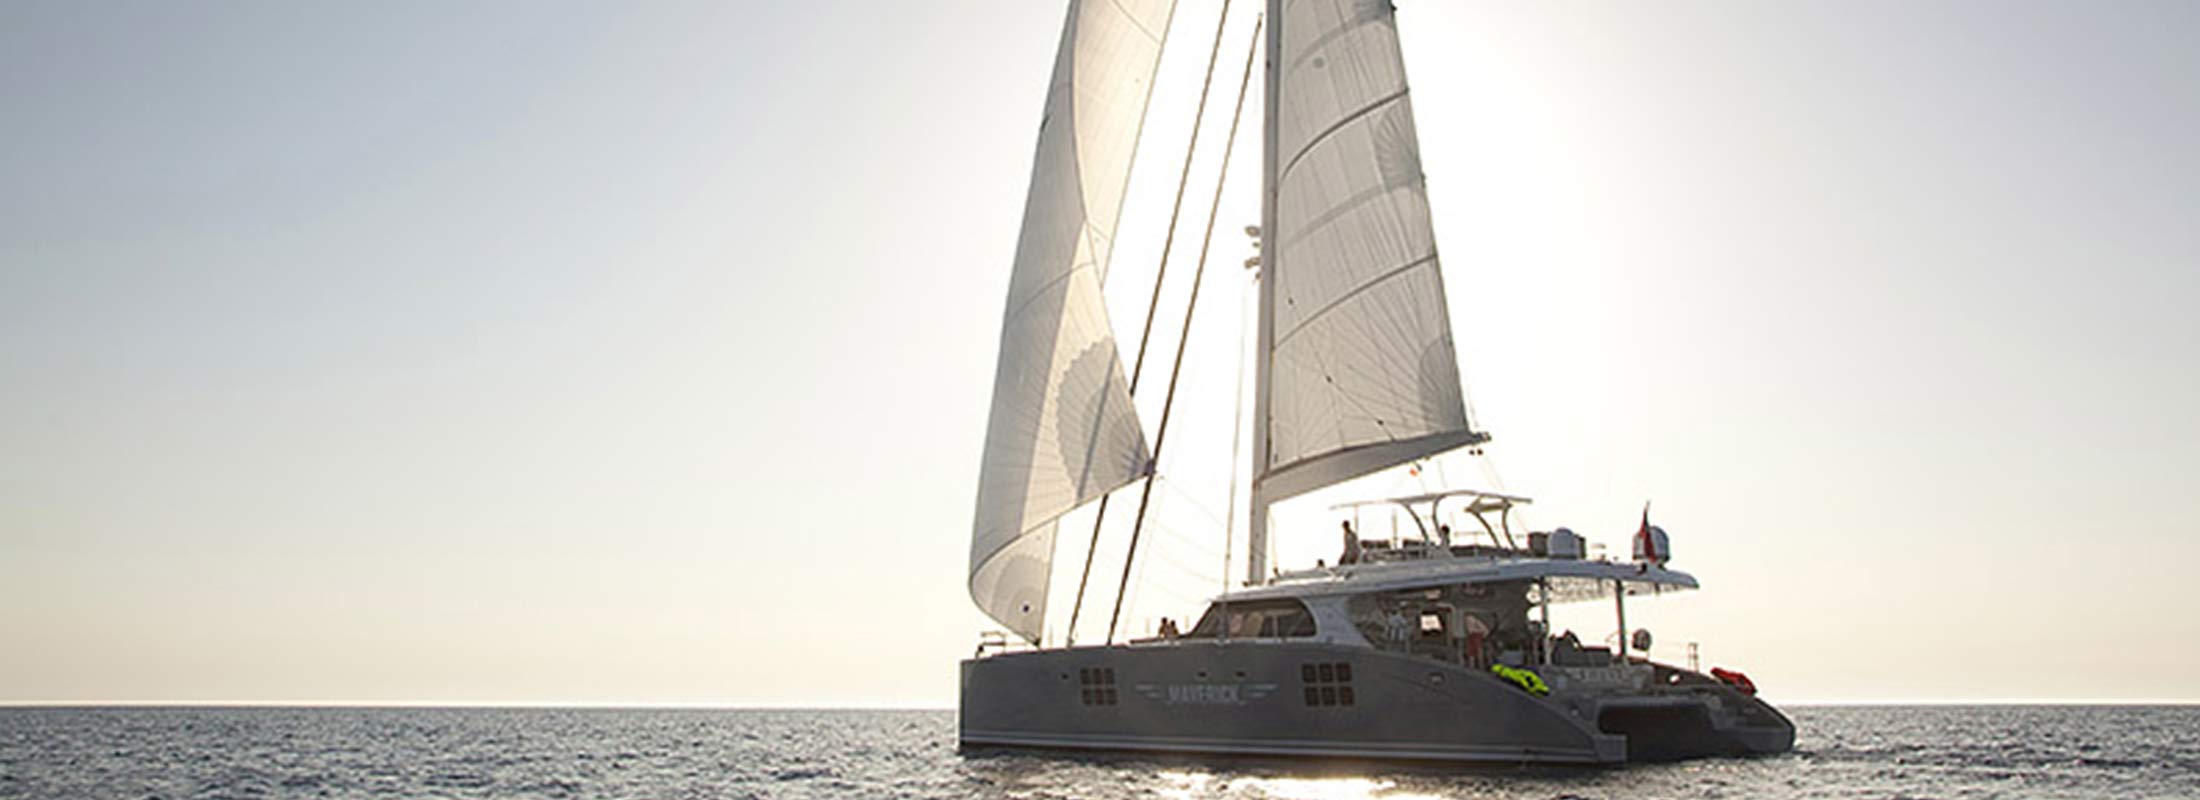 Maverick Sailing Yacht for Charter Caribbean Sea slider 2